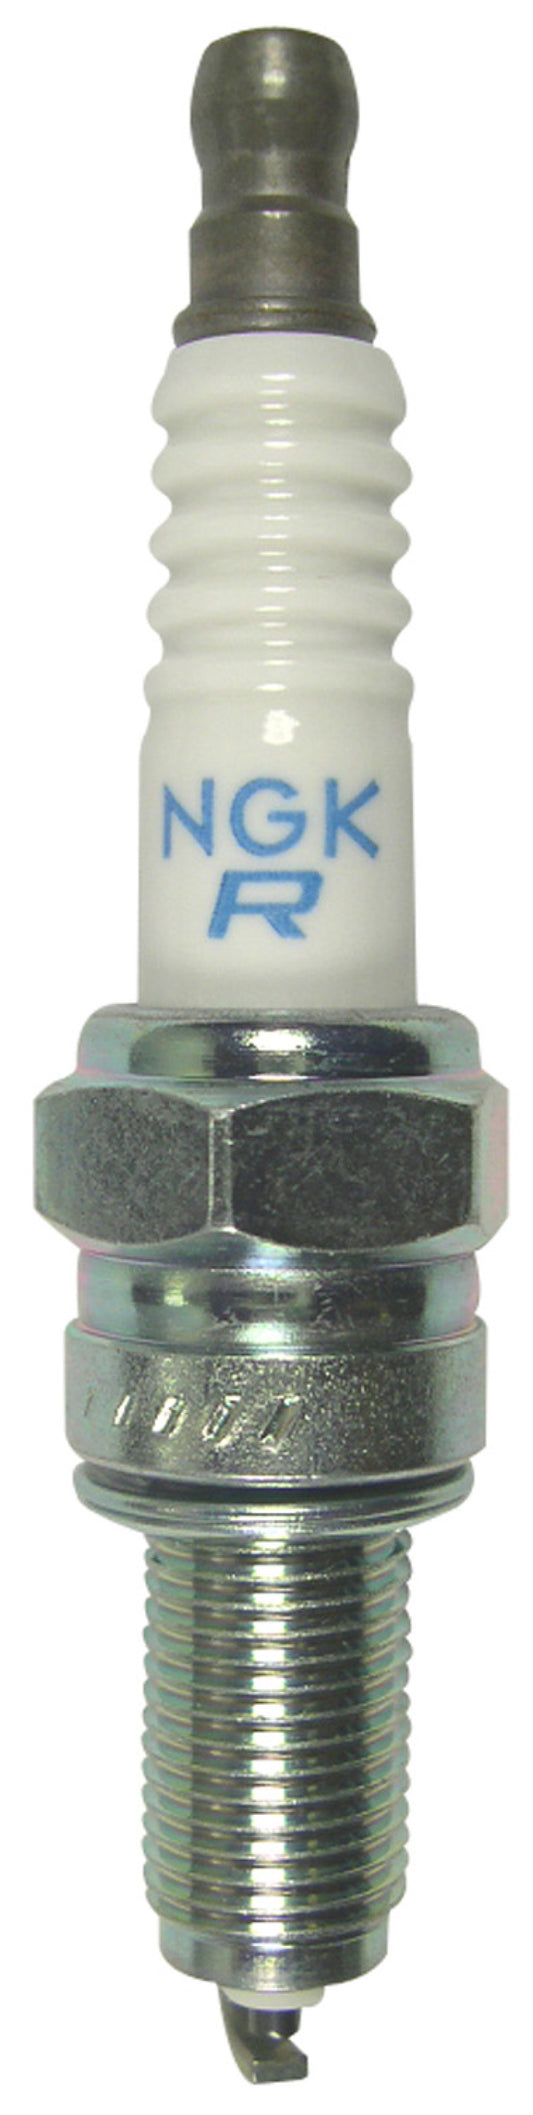 NGK Nickel Spark Plug Box of 10 (CPR6EB-9)